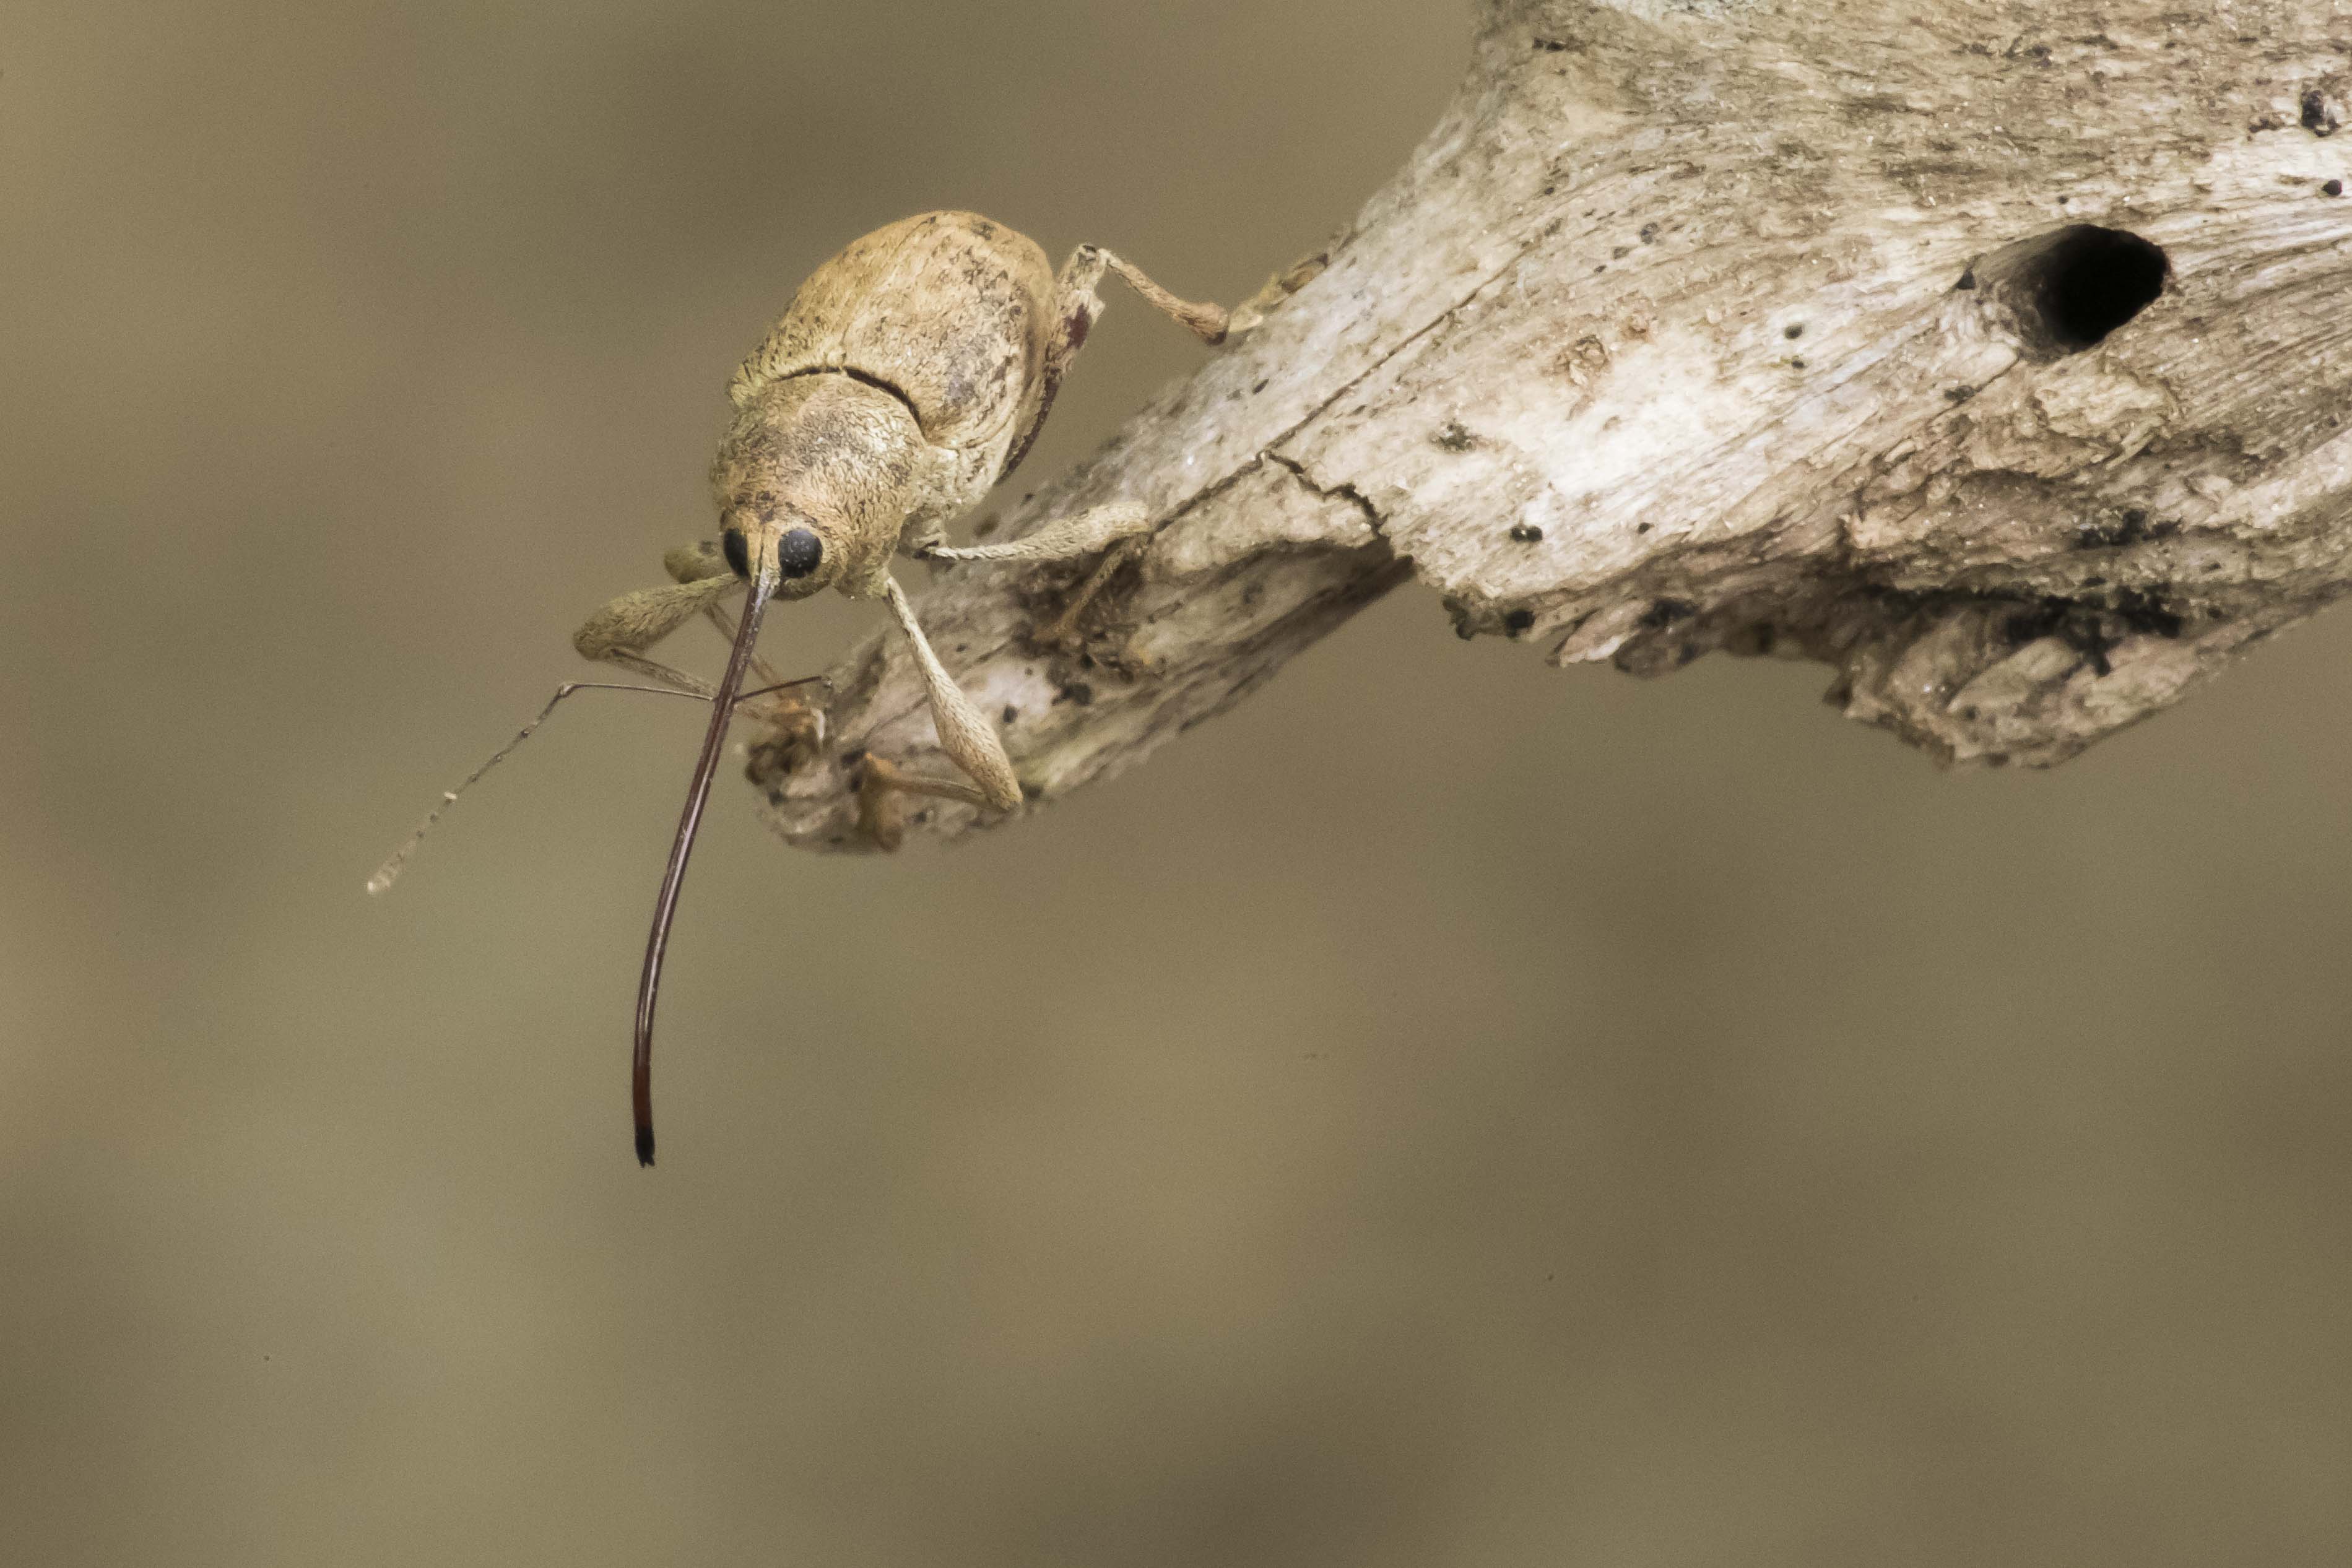 chestnut weevil (Curculio elephas) - 9/2020 - Saint-Germain-de-Calberte (FR)